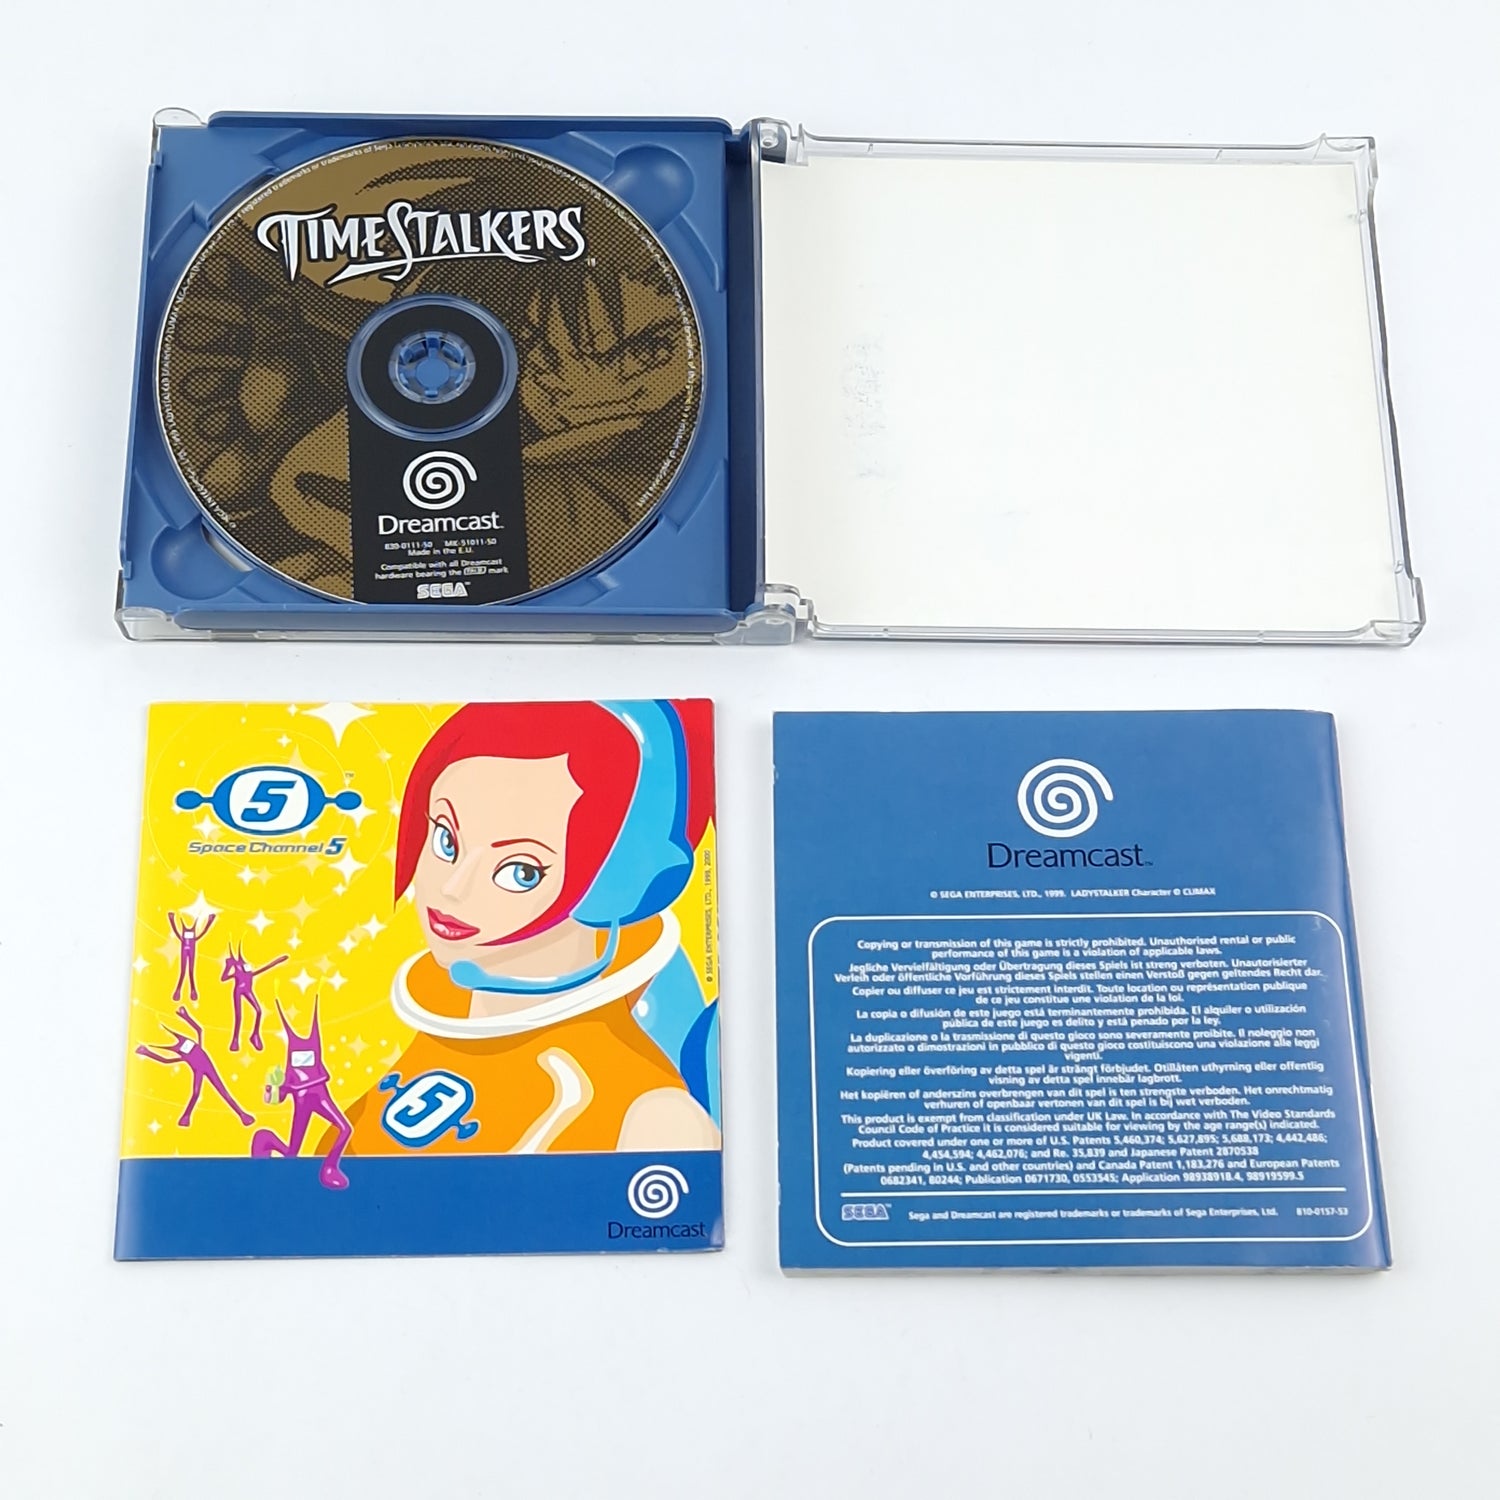 Sega Dreamcast Game: Time Stalkers - CD Instructions OVP cib / DC PAL Game